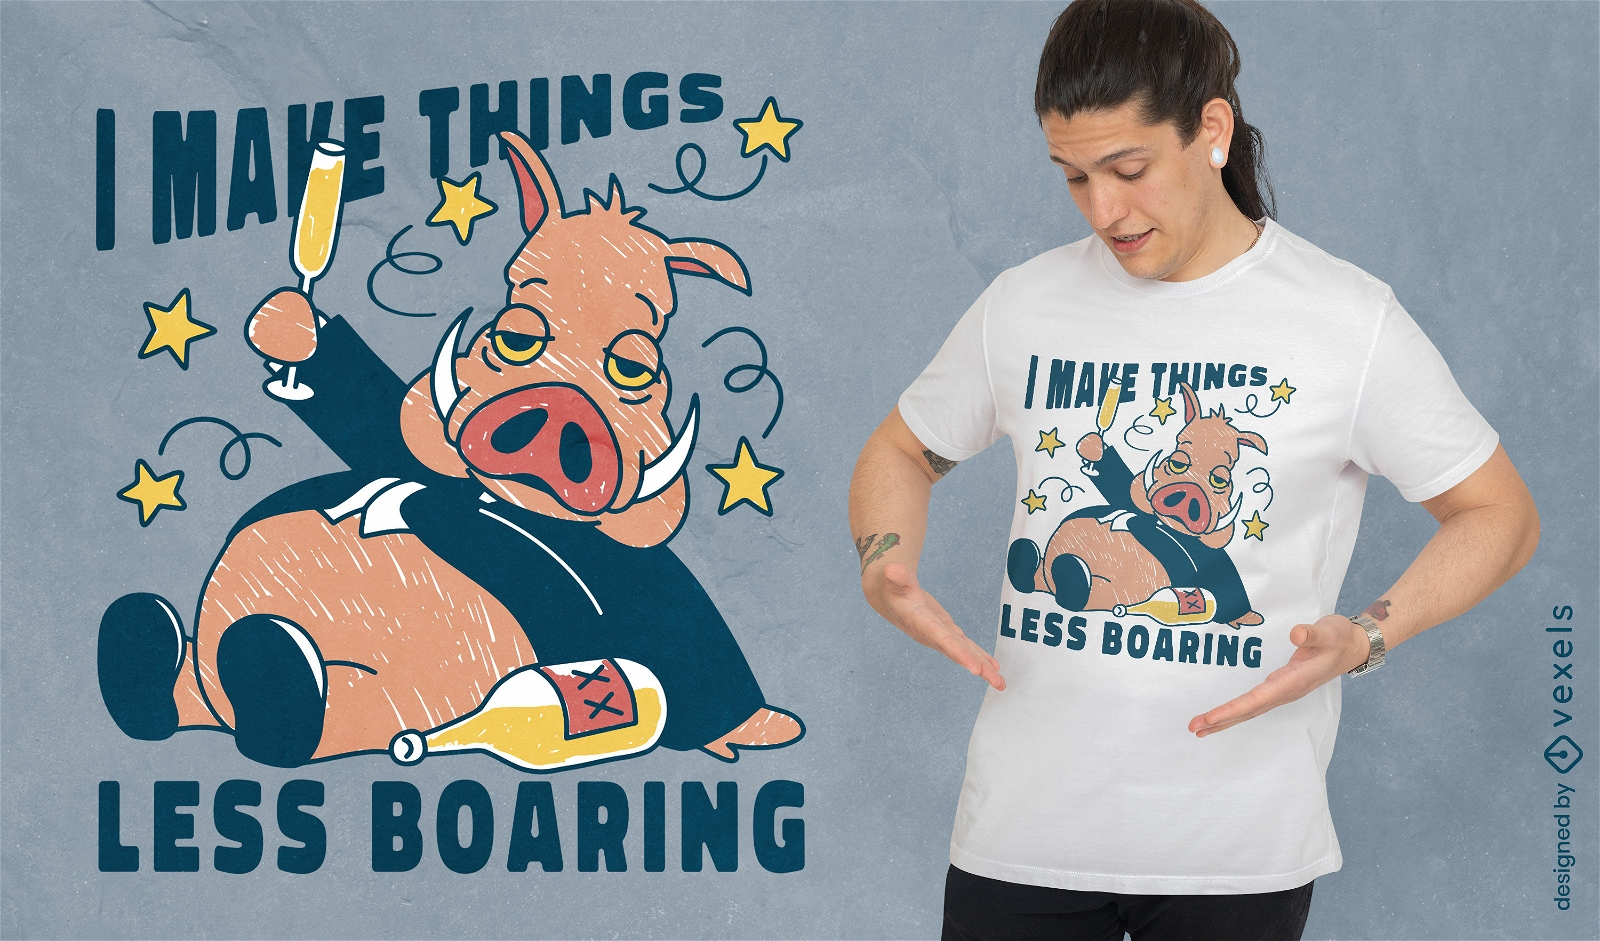 Make things less boaring drunk boar t-shirt design